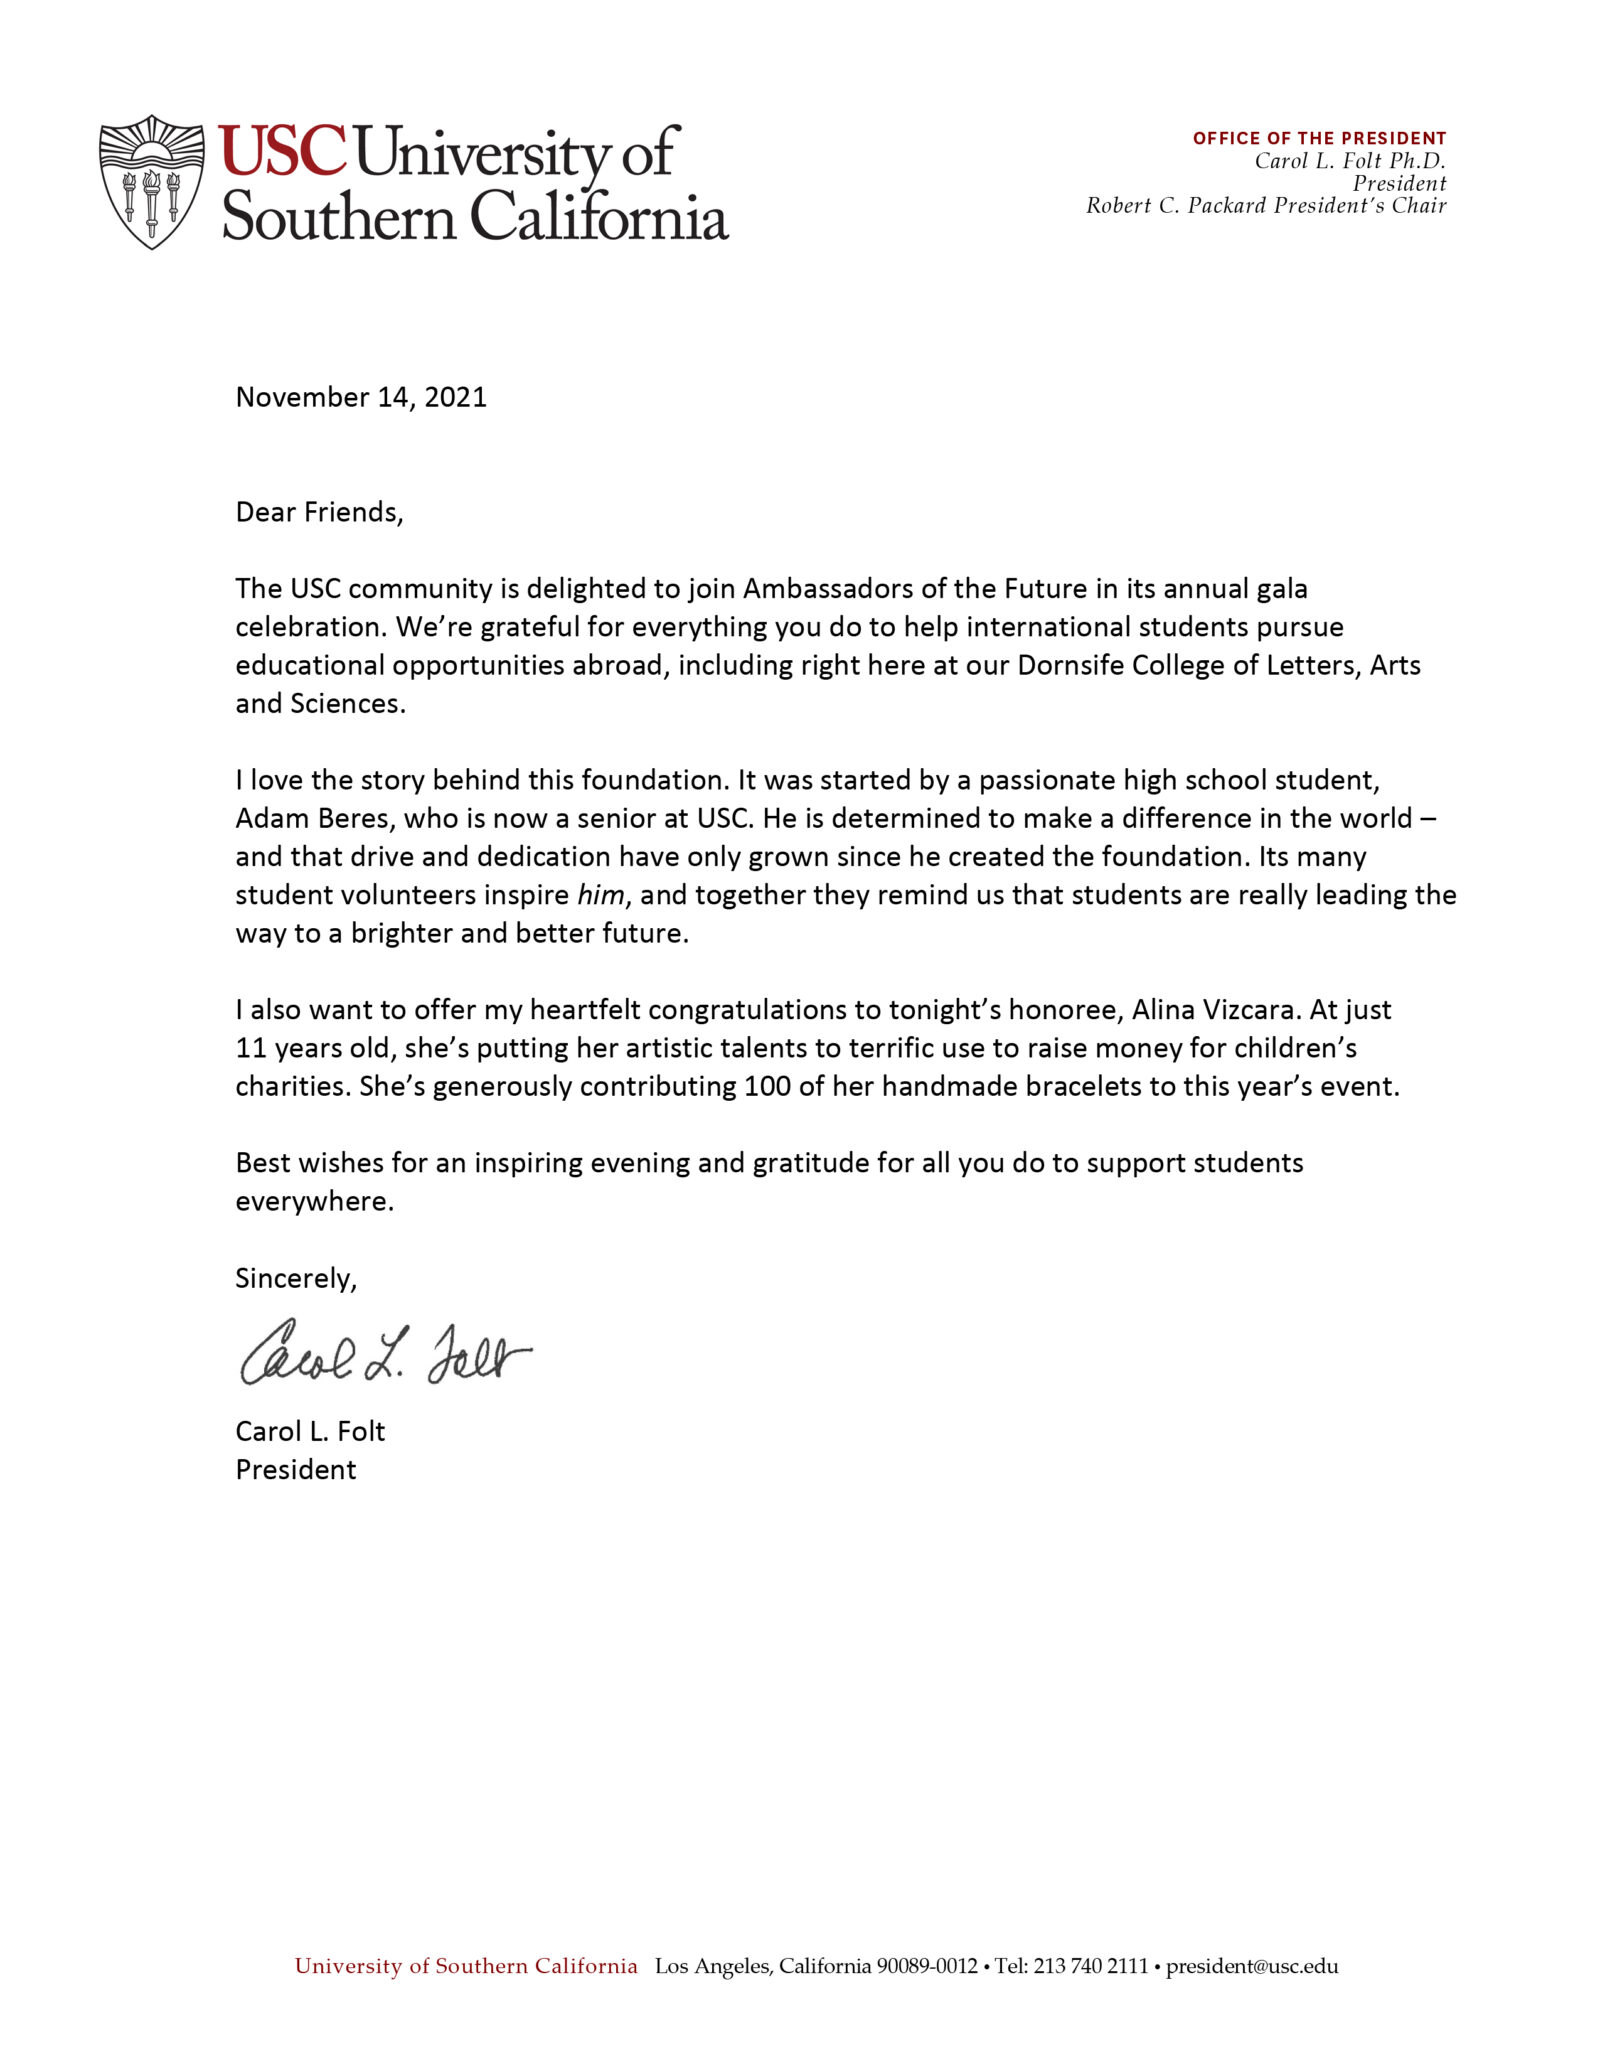 Ambassadors of the Future - 2021 gala letter - From USC President Carol Folt